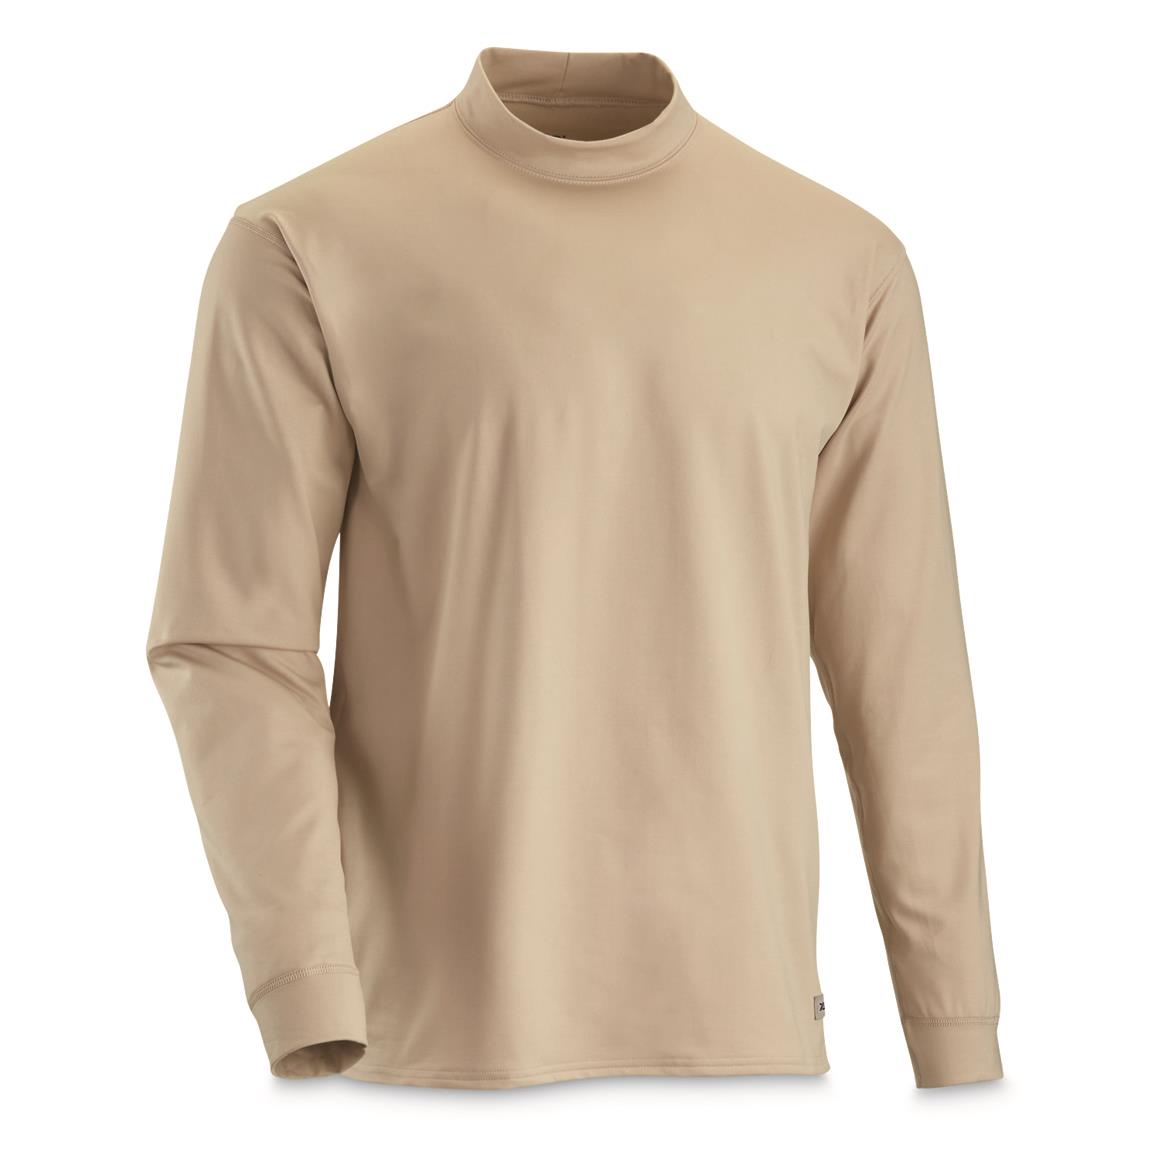 U.S. Military Surplus Heavyweight Performance Long Sleeve Base Layer Shirt, New, Tan